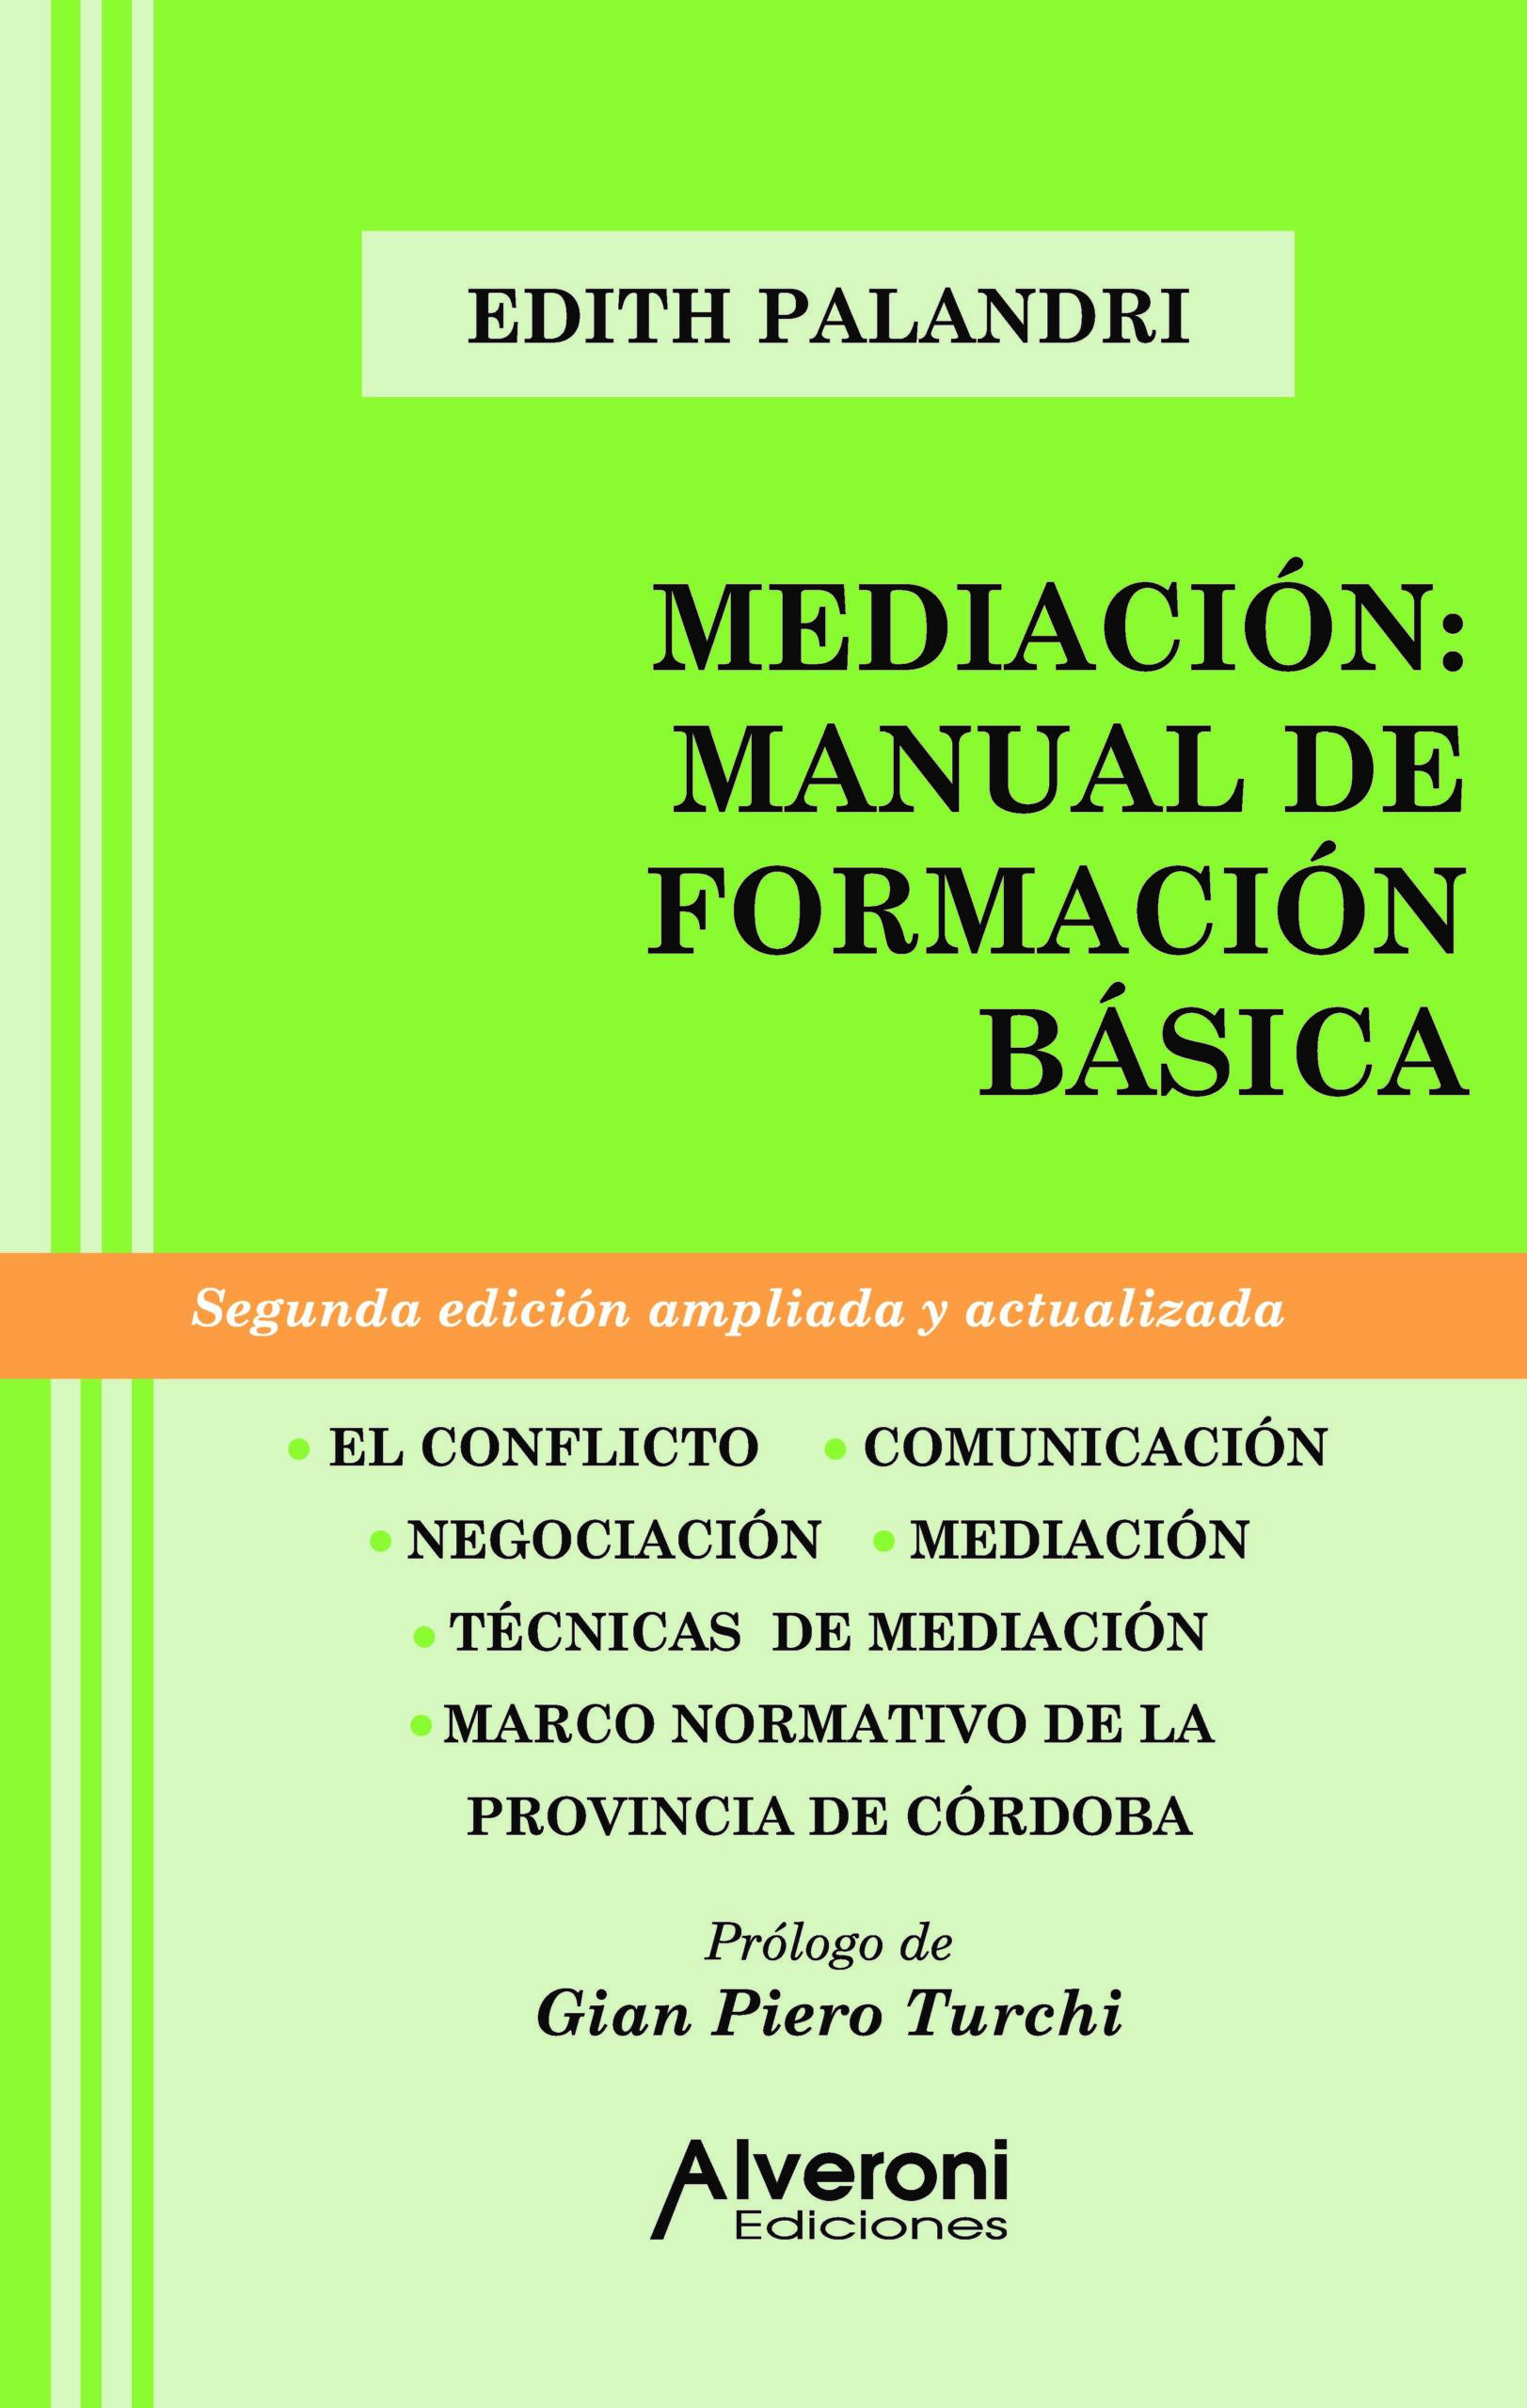 Mediación: Manual de Formación Básica | Alveroni Libros Jurídicos